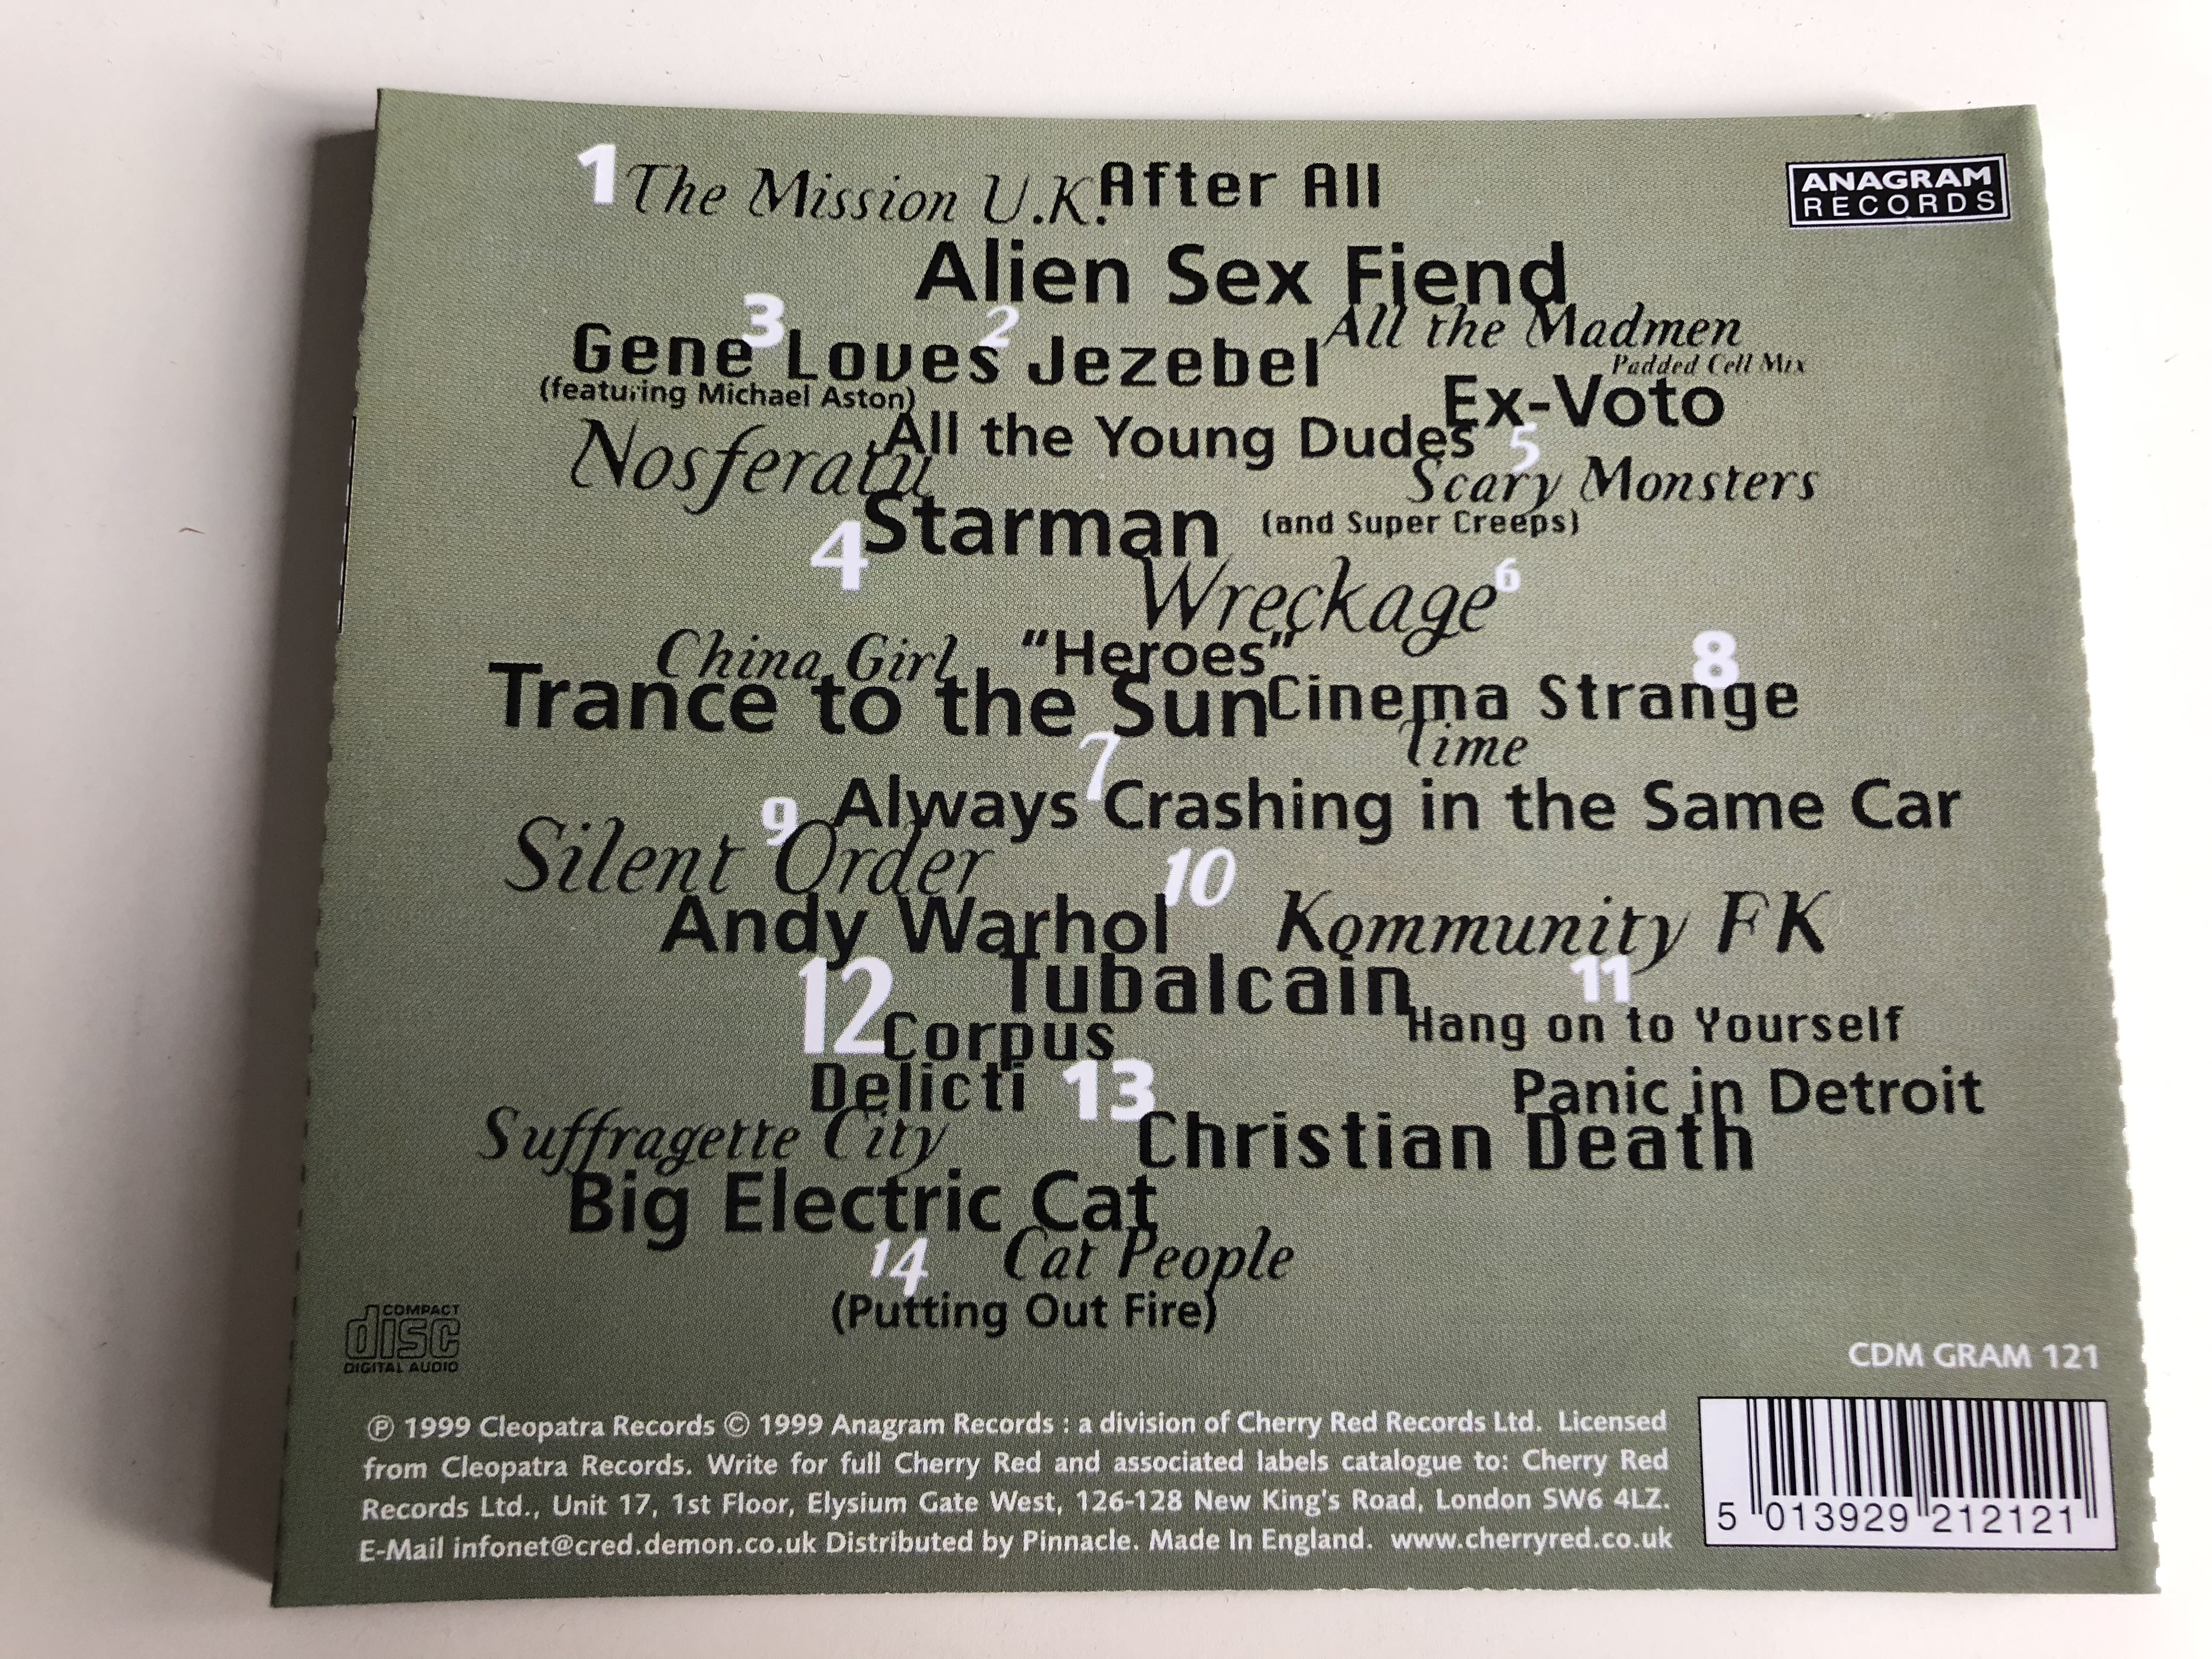 goth-oddity-a-tribute-to-david-bowie-ft.-alien-sex-fiend-mission-uk-nosferatu-christian-death-gene-loves-jezebel-audio-cd-1999-cleopatra-records-cdm-gram-121-4-.jpg